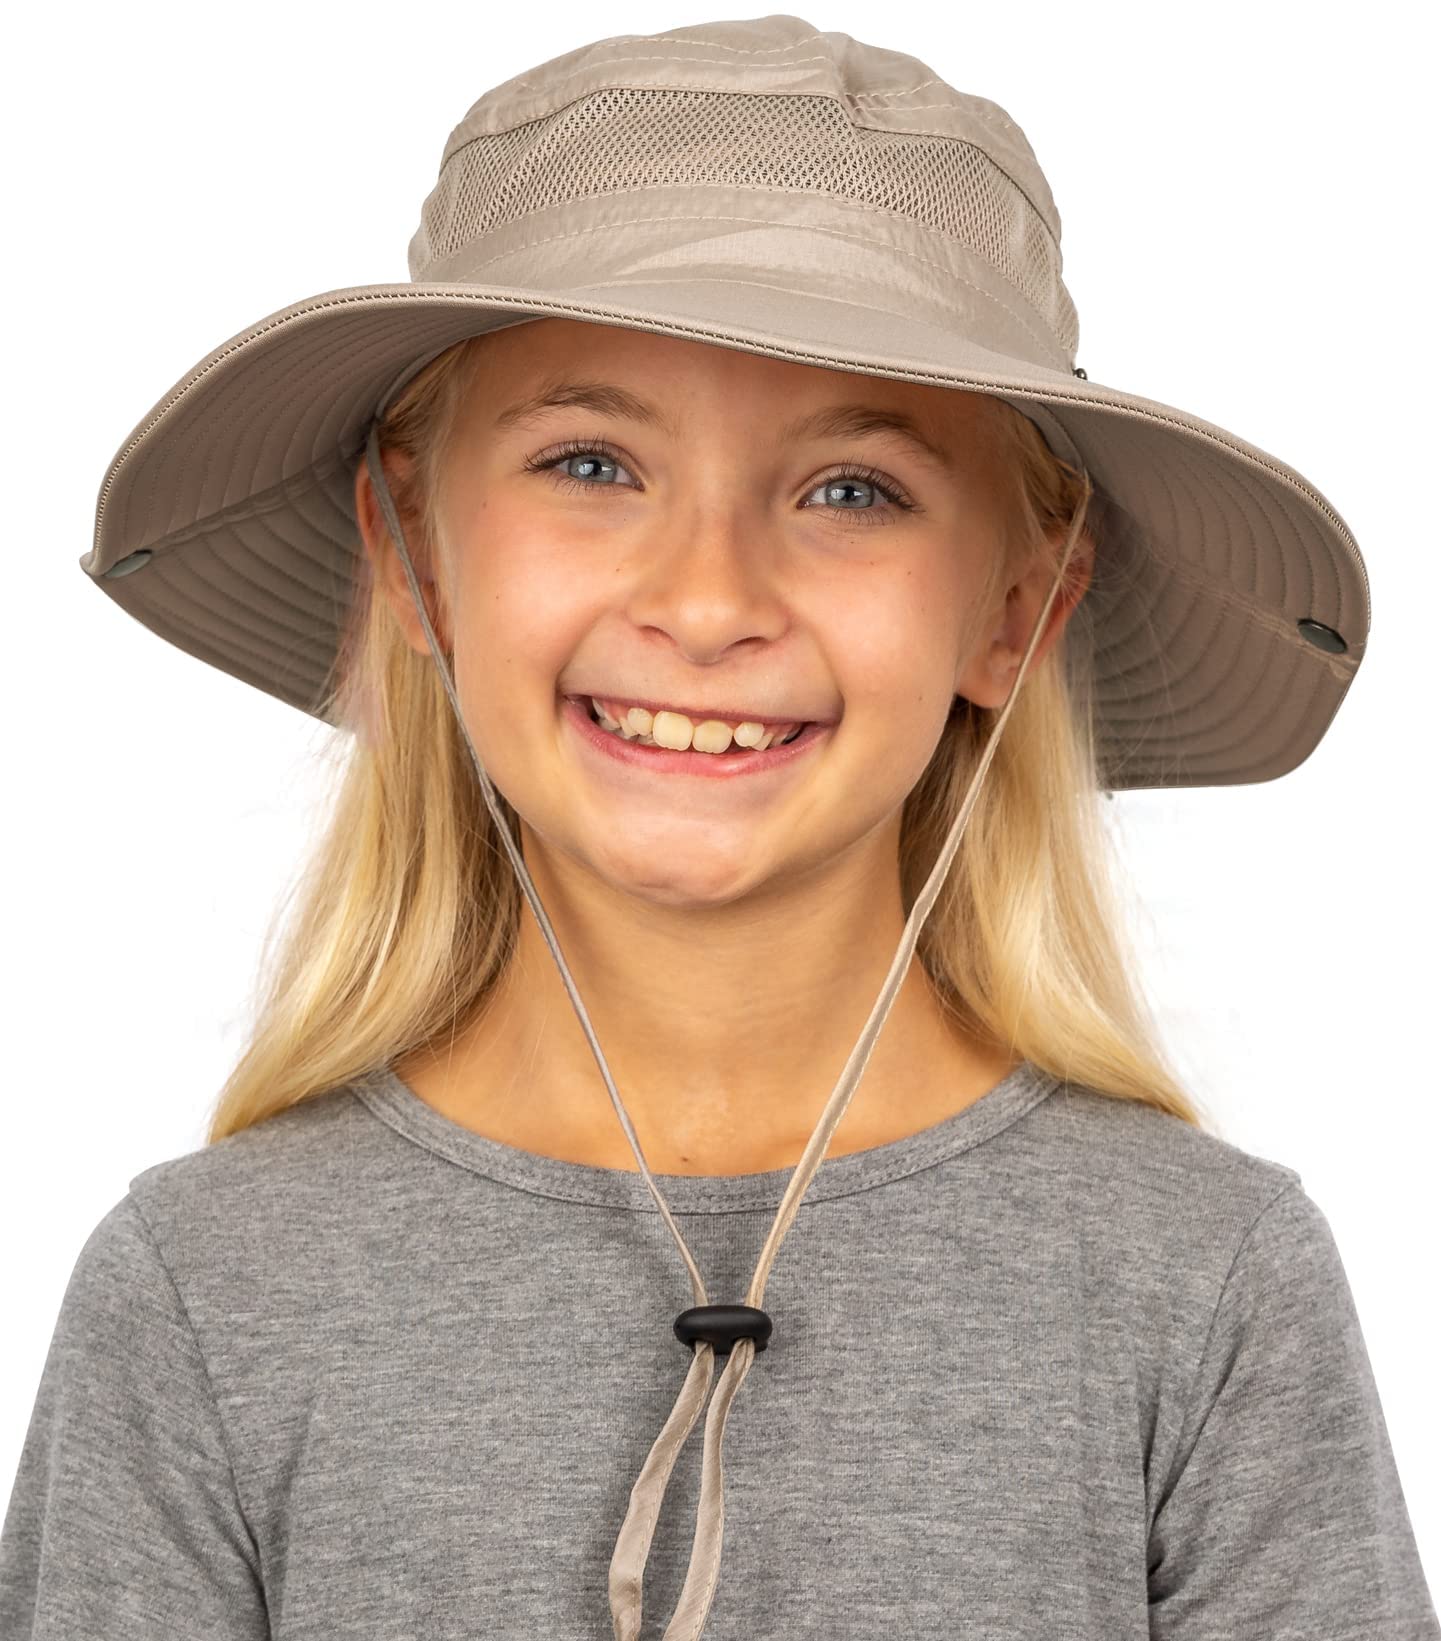 GearTOP UPF 50+ Kids Sun hat to Protect Against UV Sun Rays - Kids